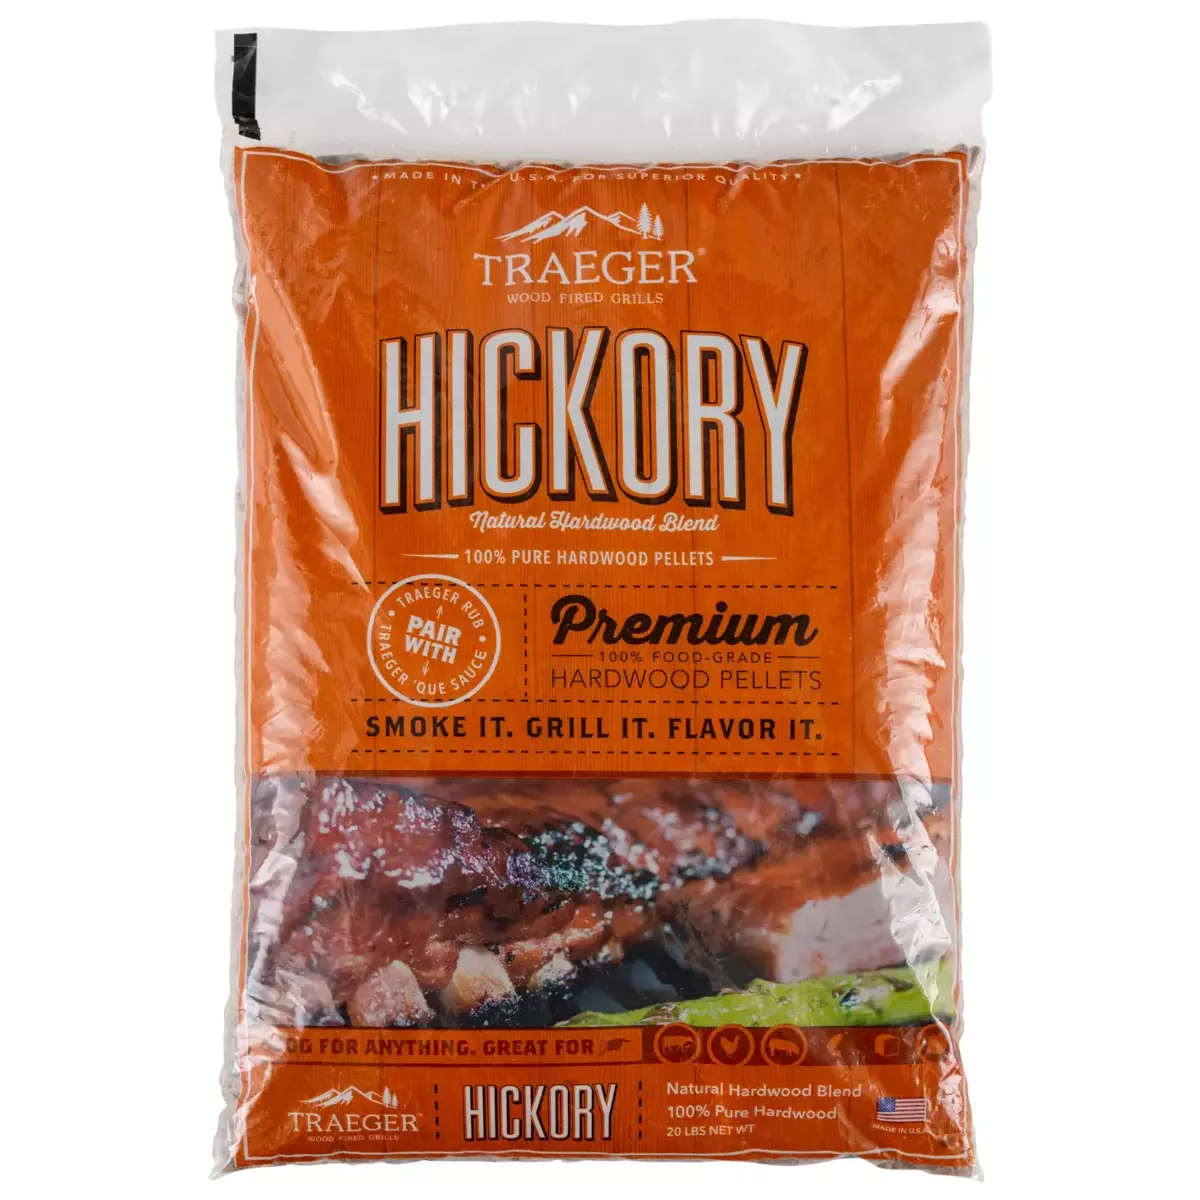 Traeger hickory pellets 9kg www.bbqkopen.nl